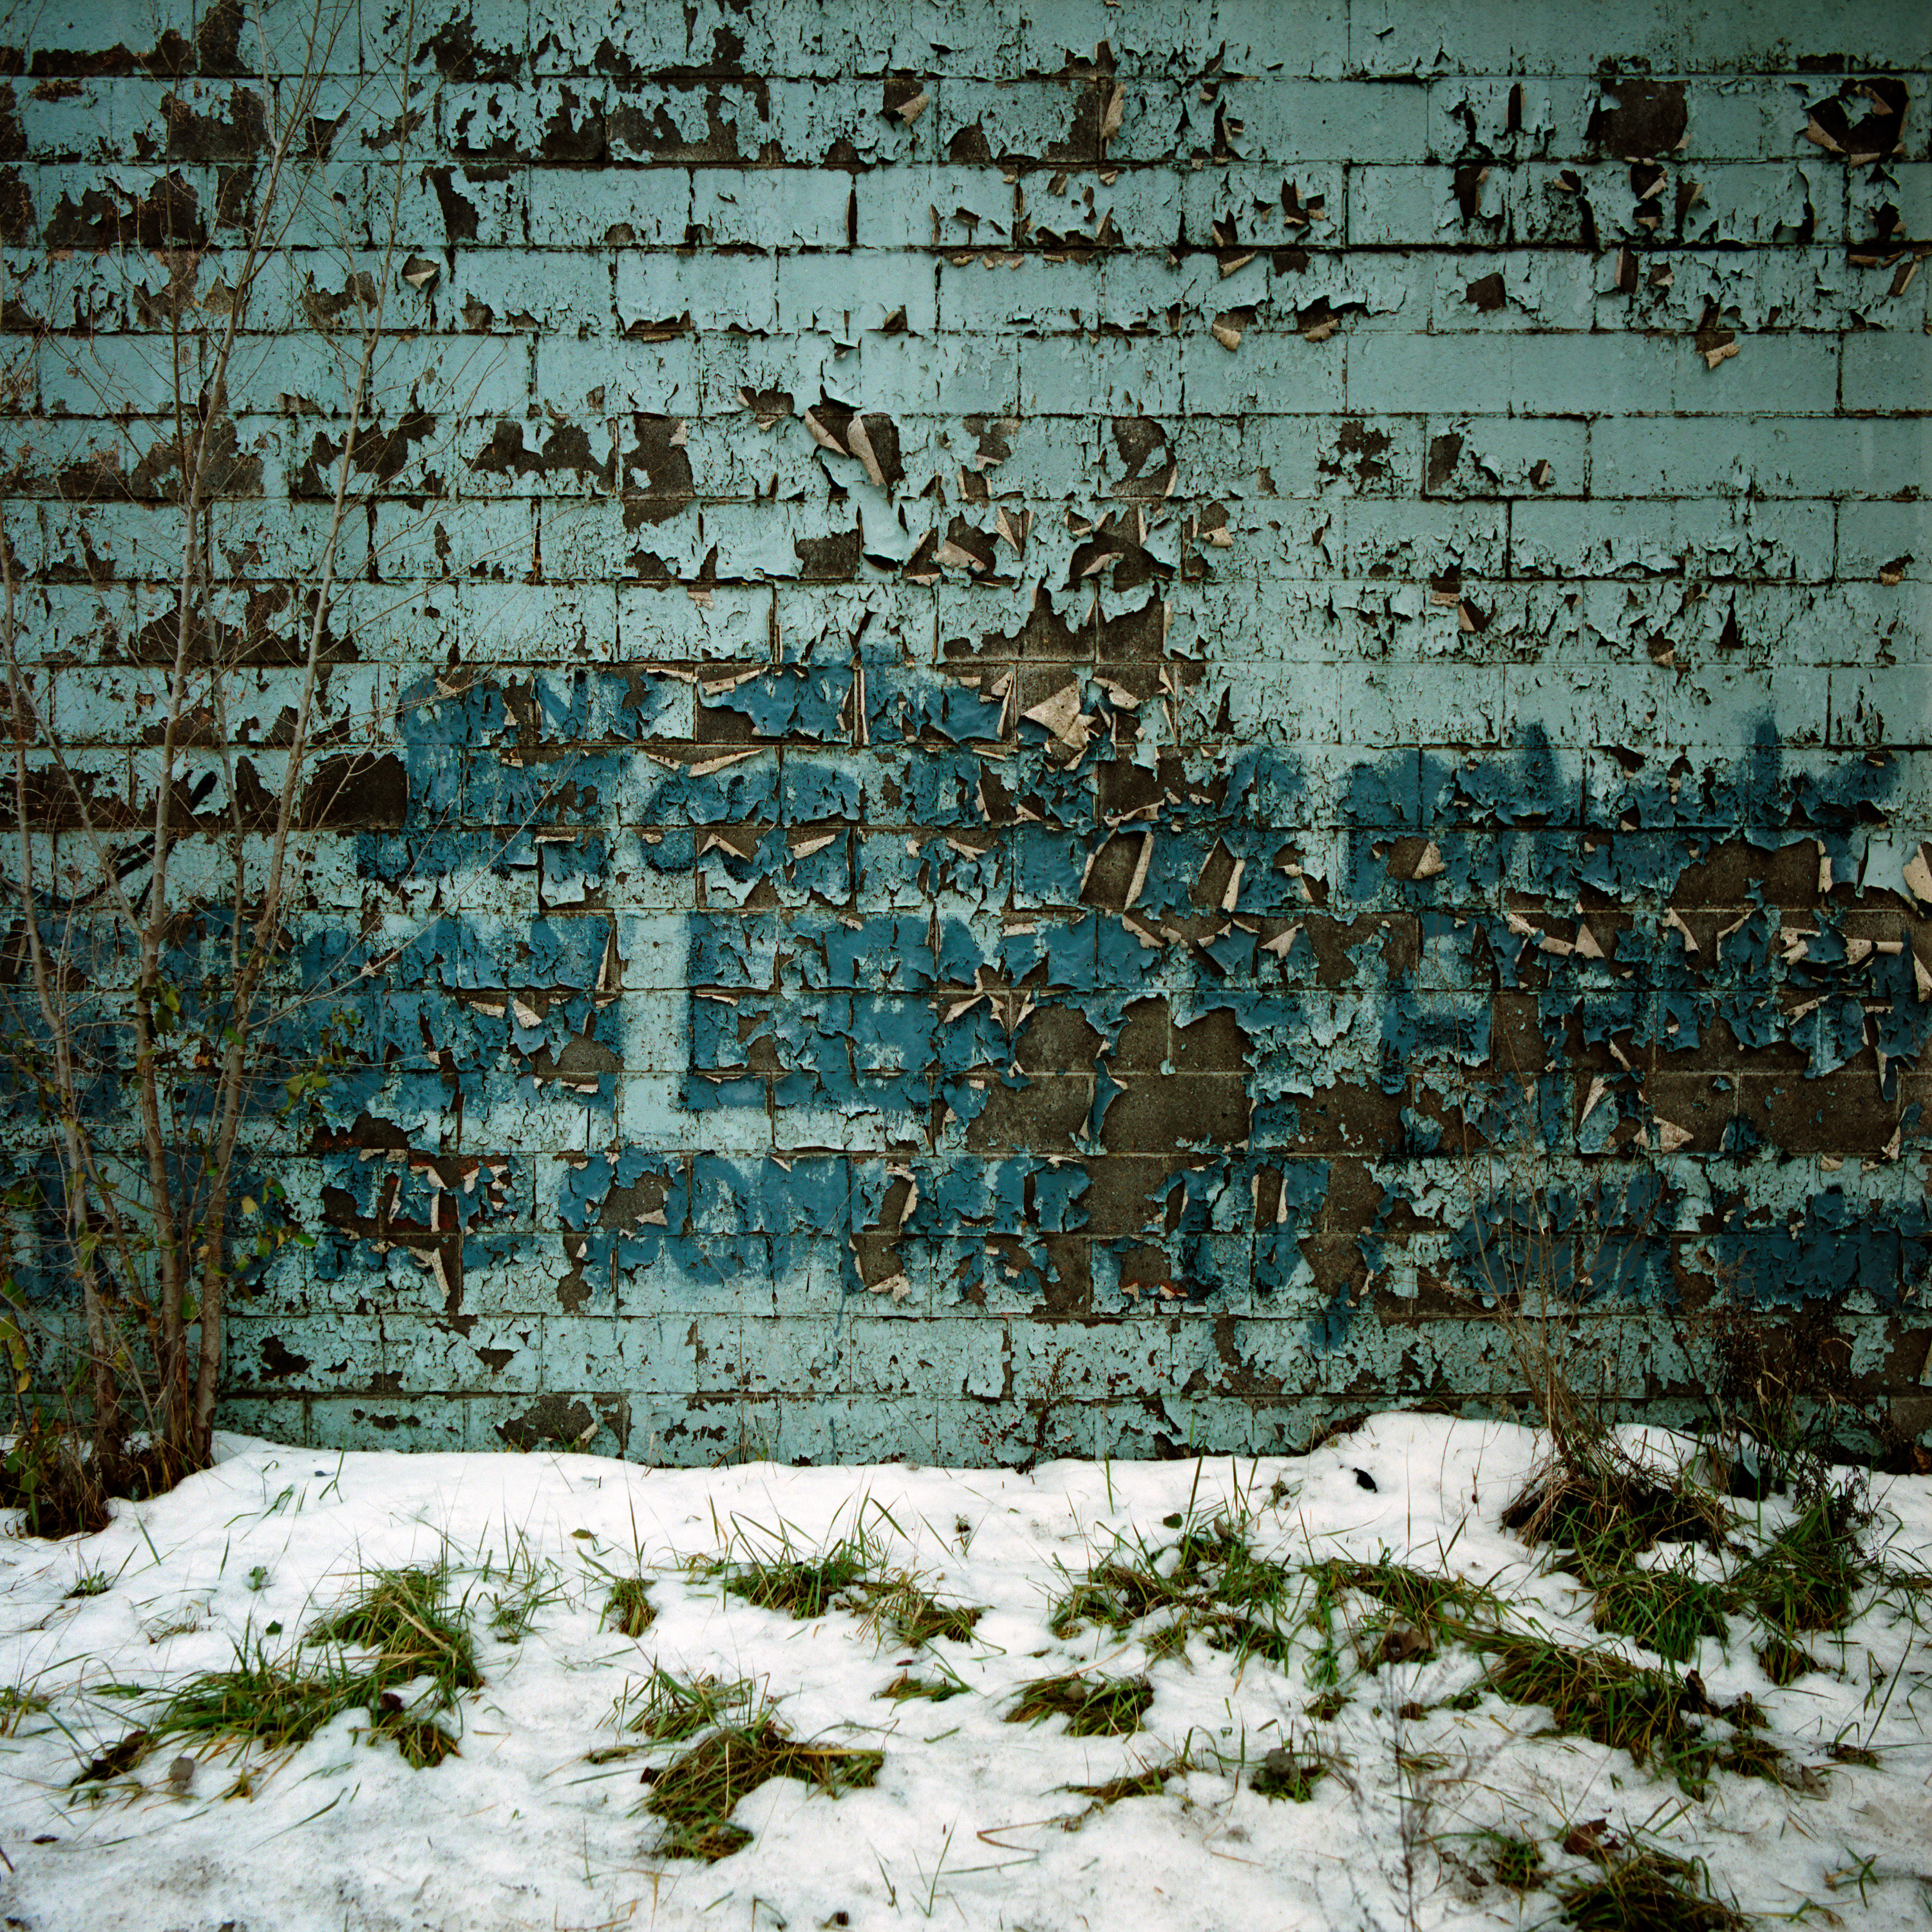 Peeling paint on a wall. Detroit, Michigan.